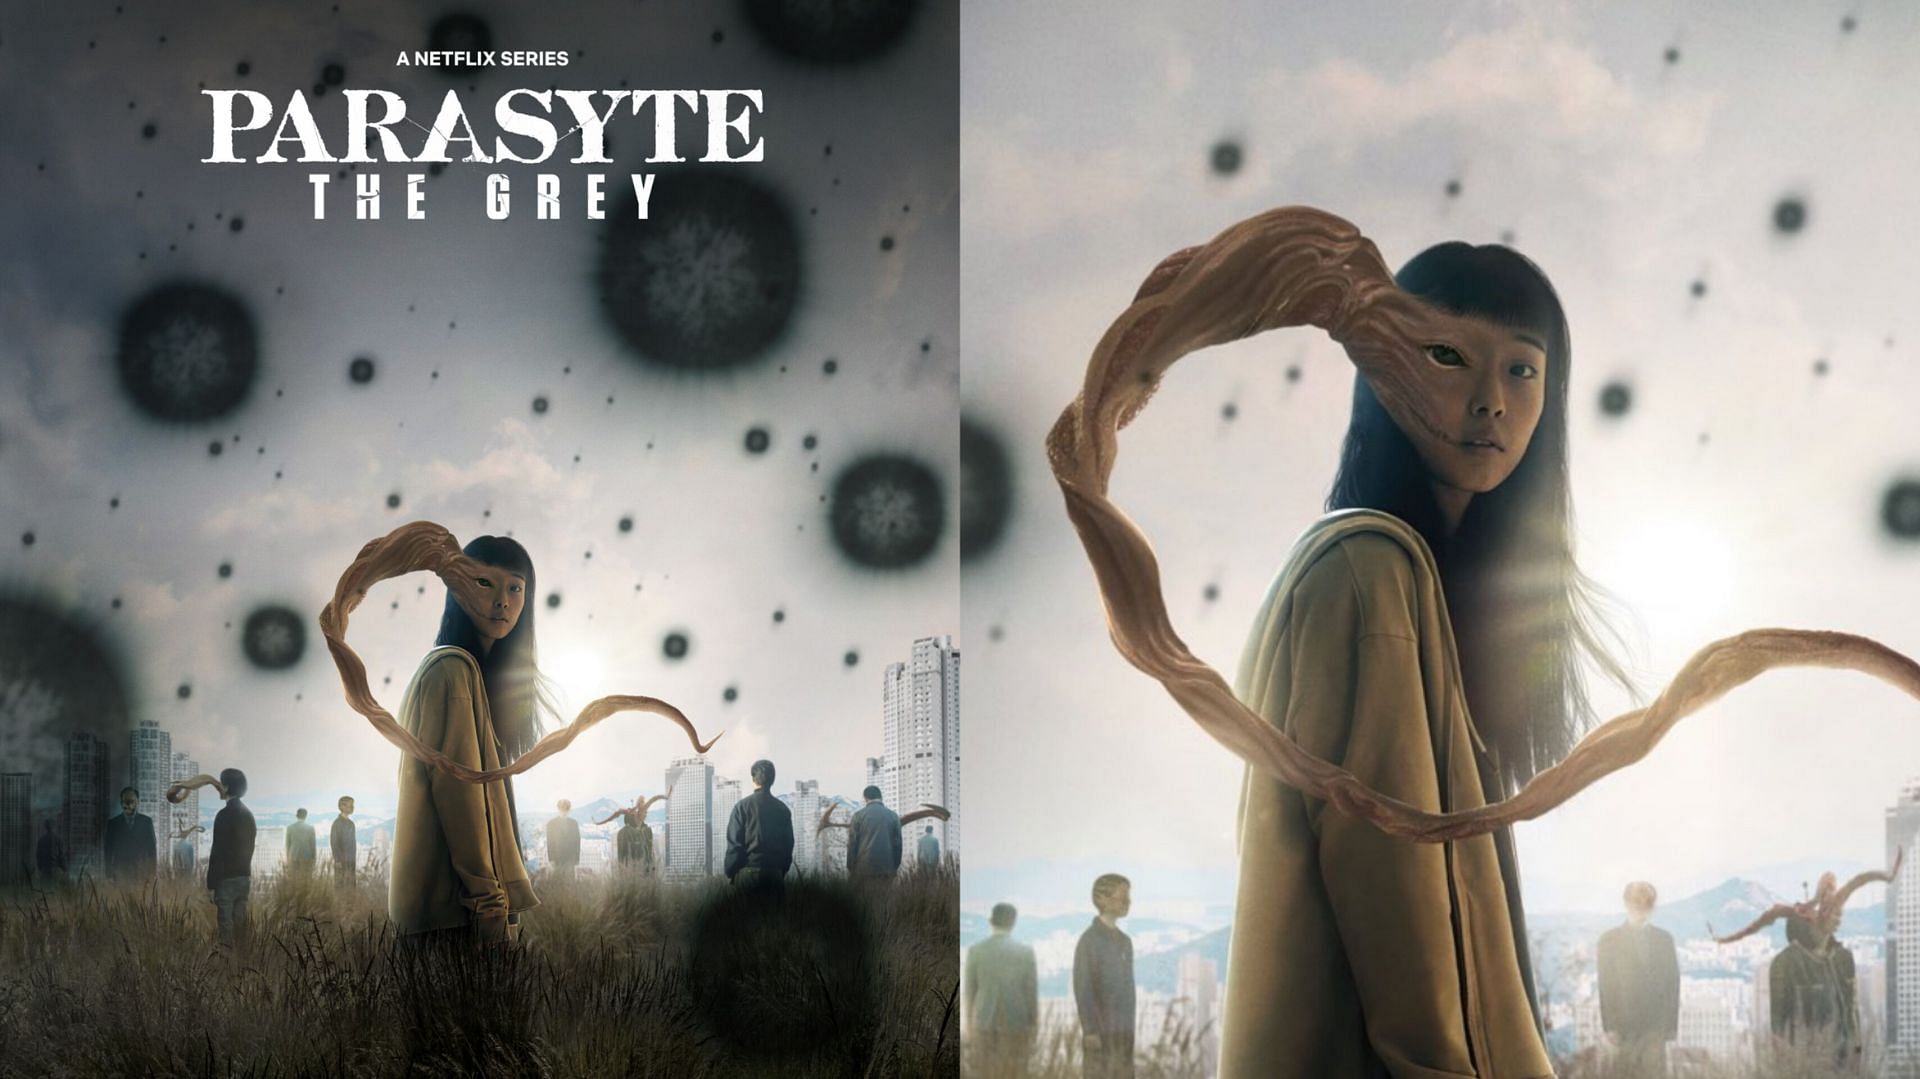 Featuring Parasyte: The Grey cast (Image via Netflix/Twitter)